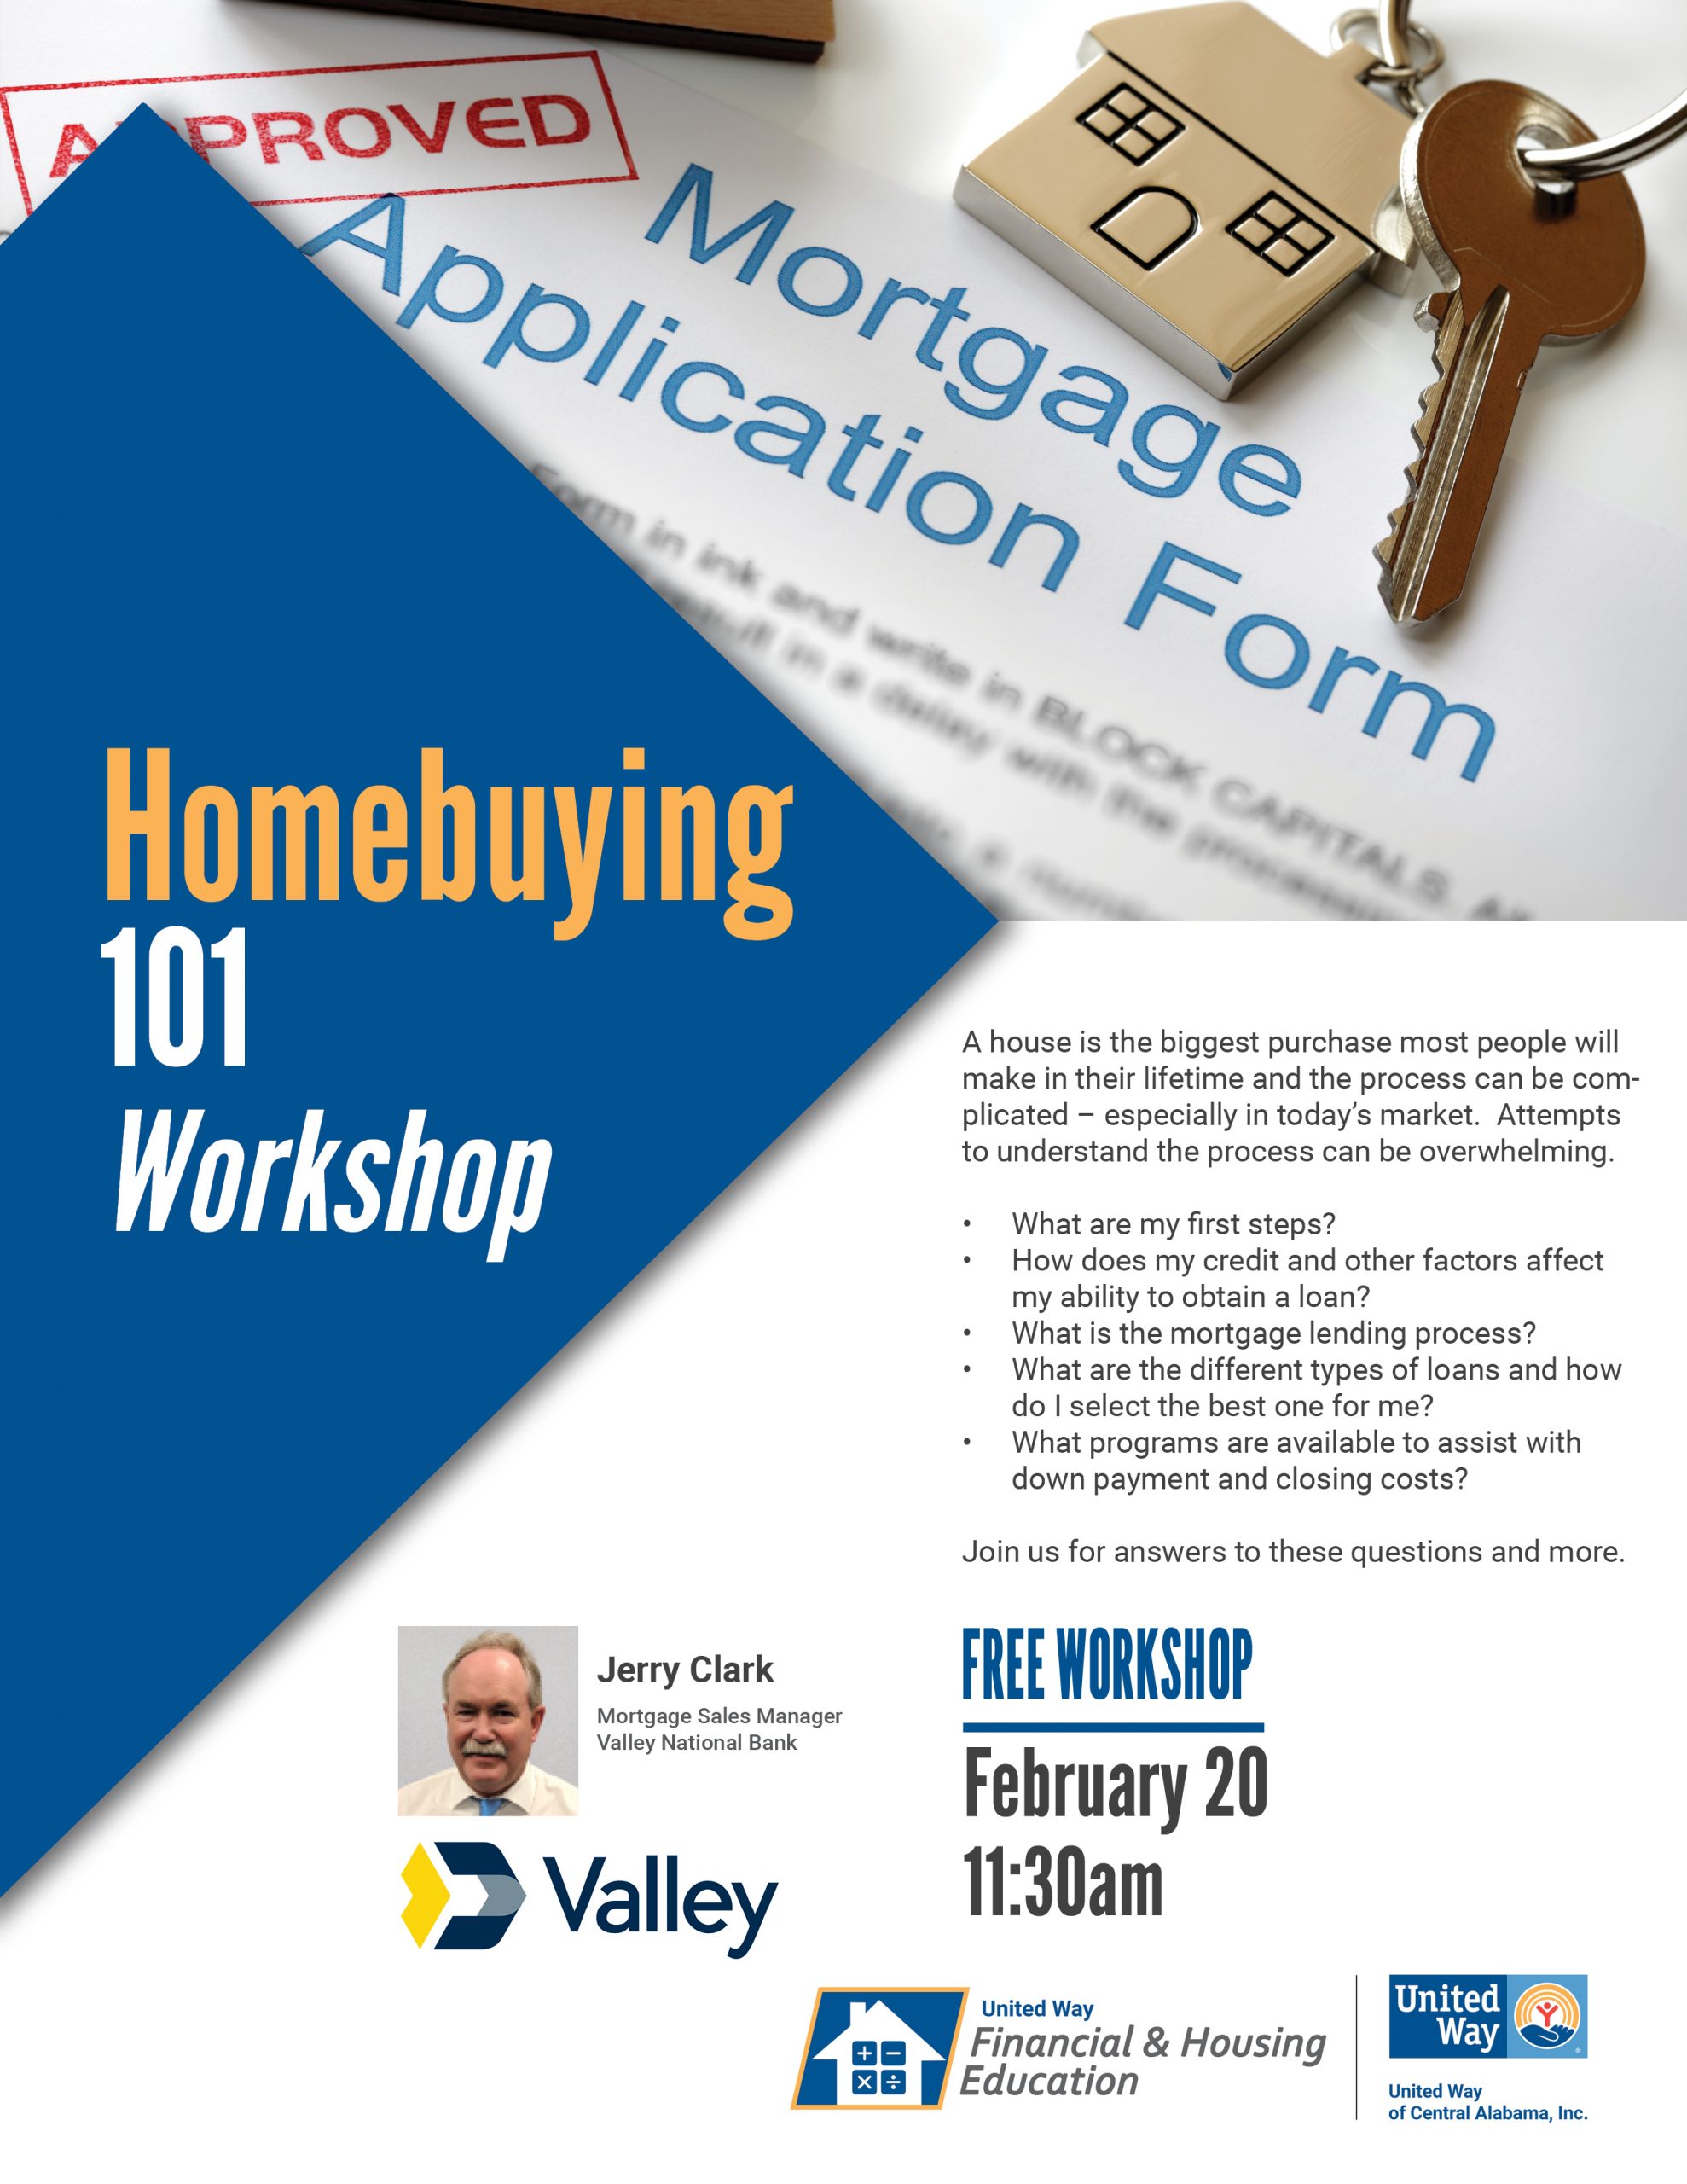 Homebuying 101 Workshop Flyer UWCA Financial and Housing Education